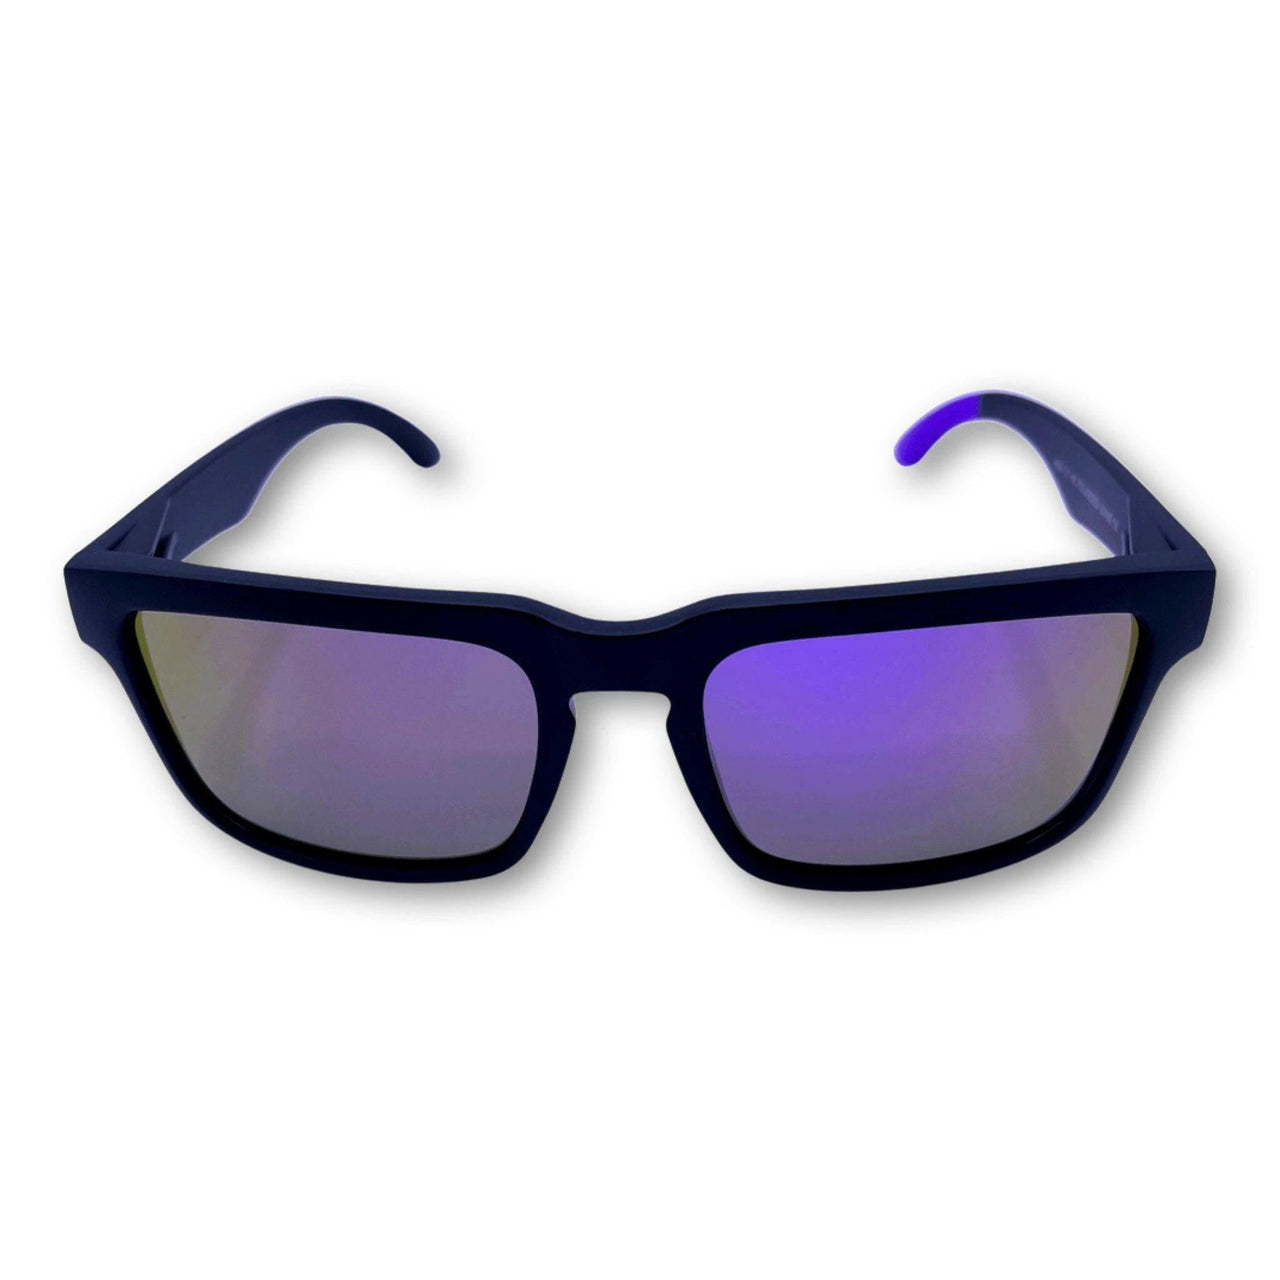 Hustler Purple & Black Sunglasses - Rebel Reaper Clothing Company Sunglasses